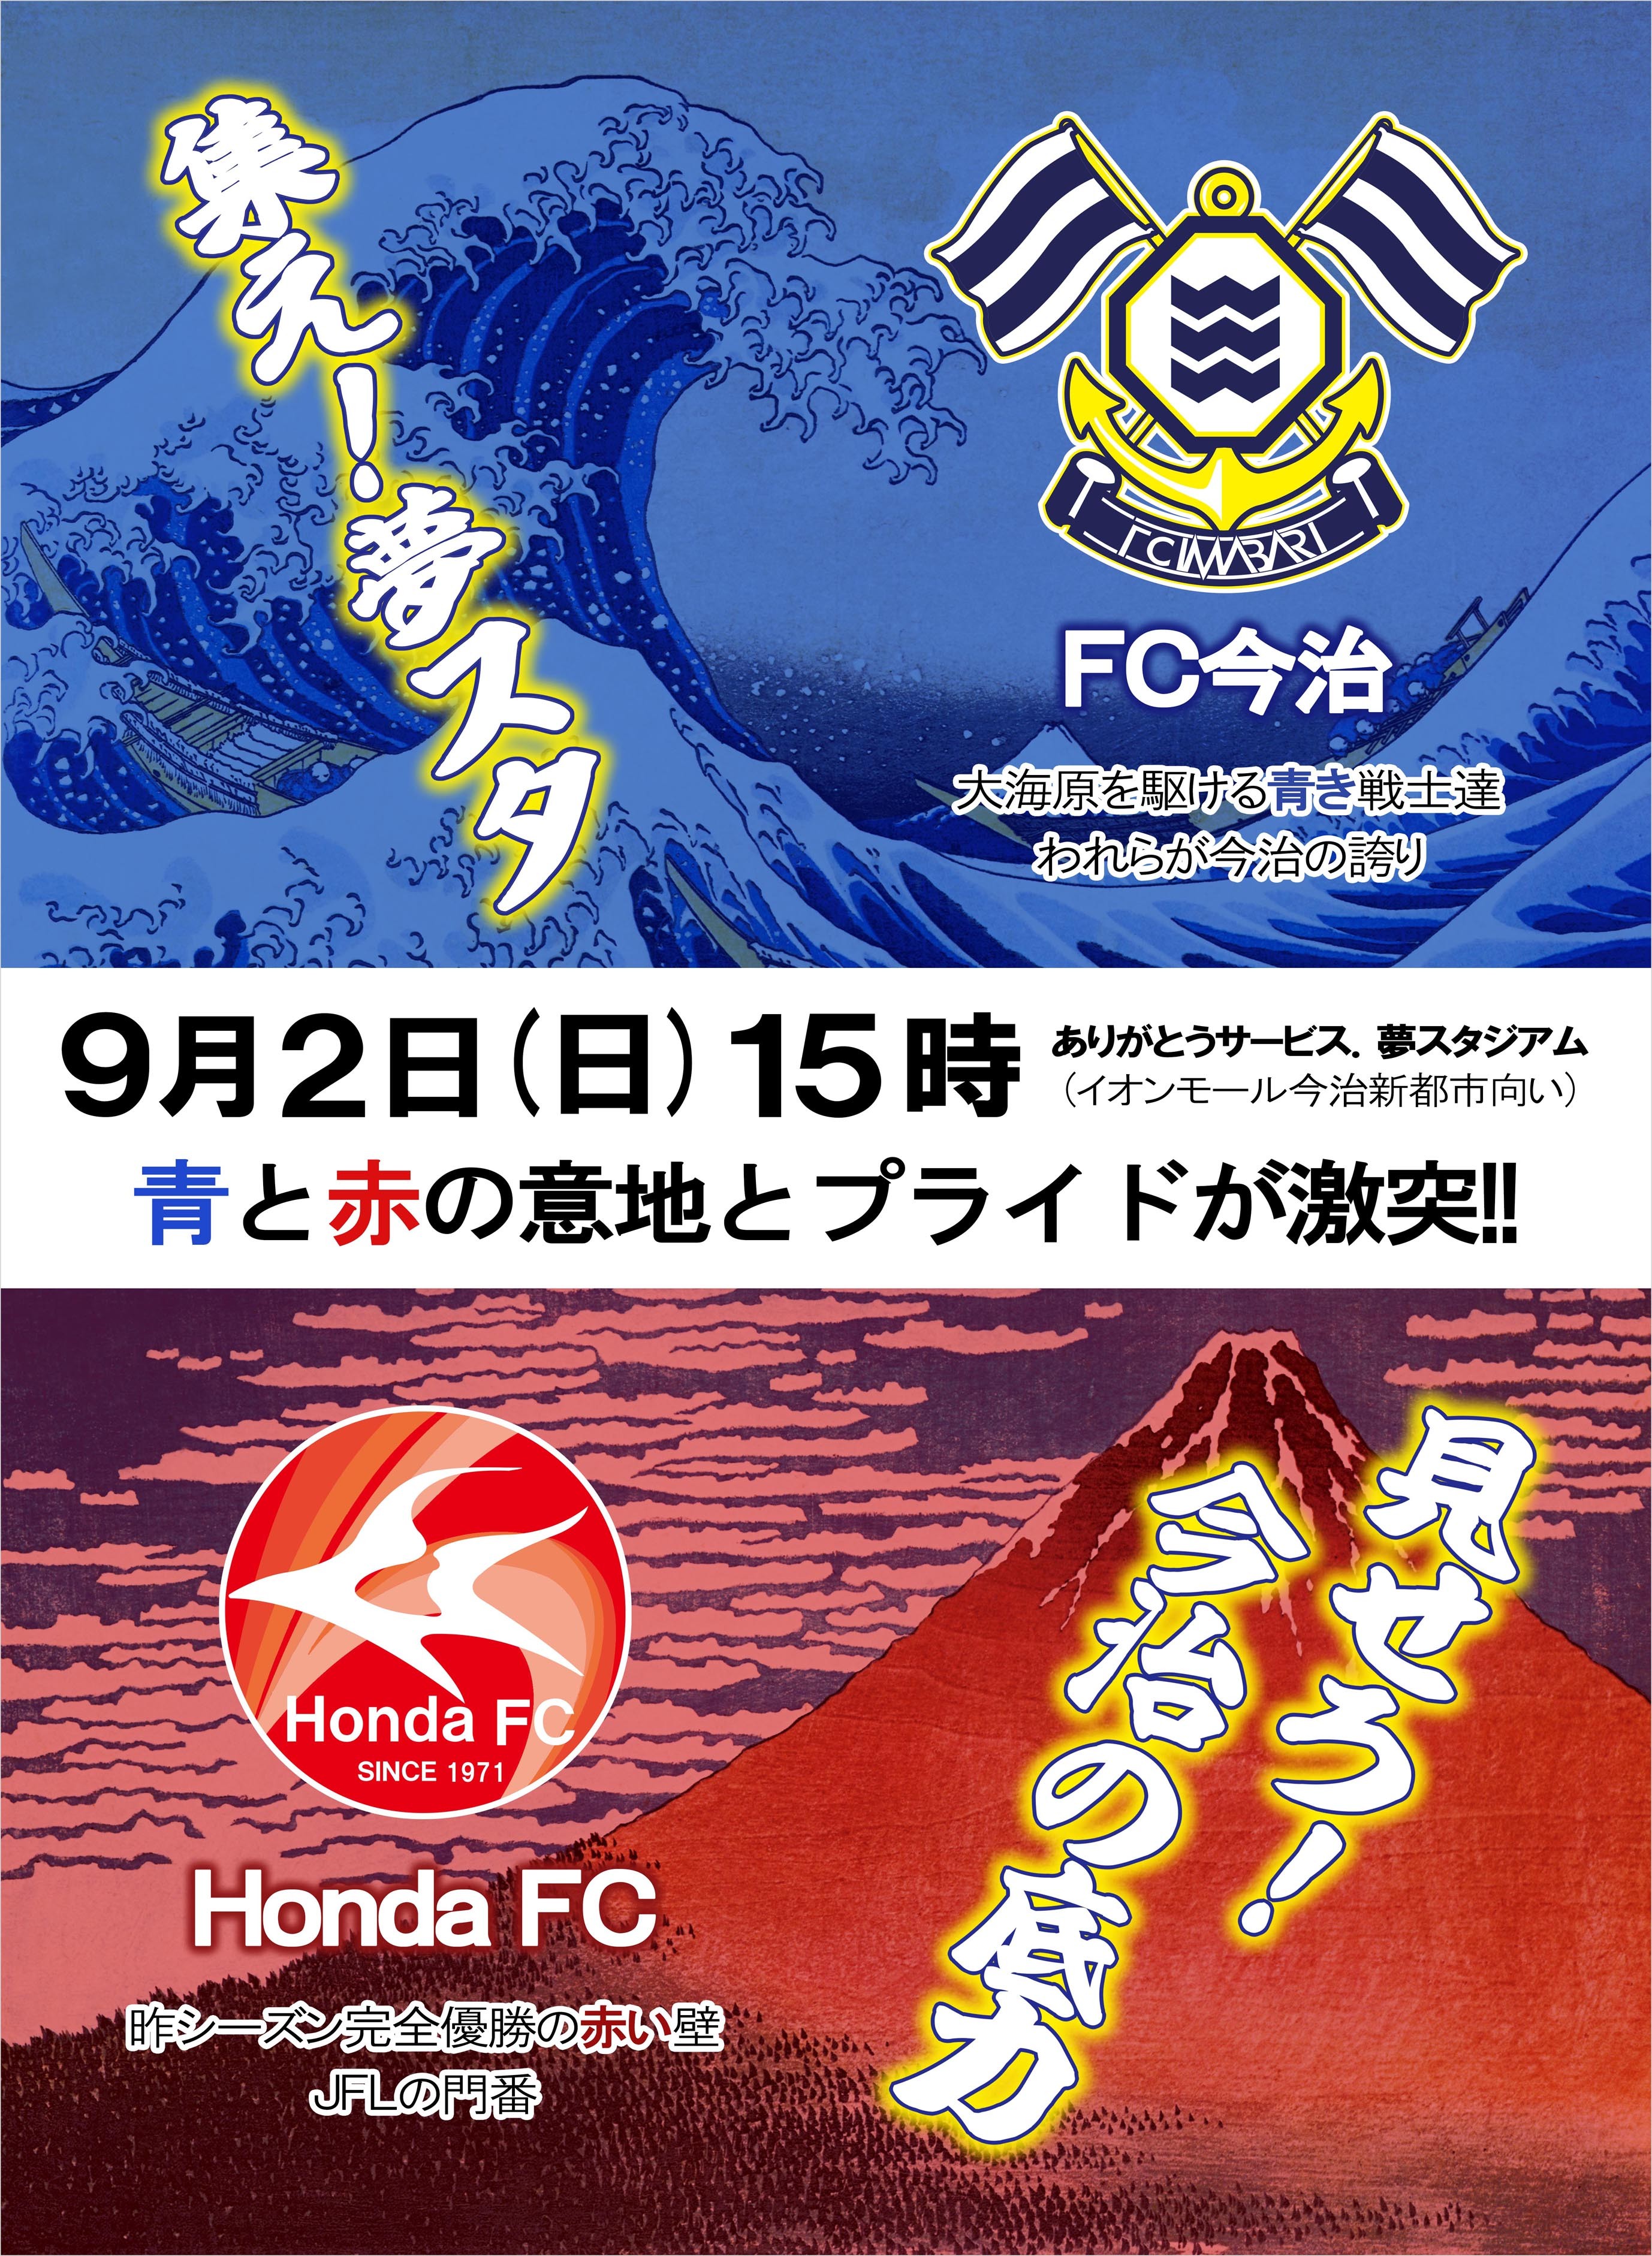 FC今治 v.s. HONDA FC.jpg